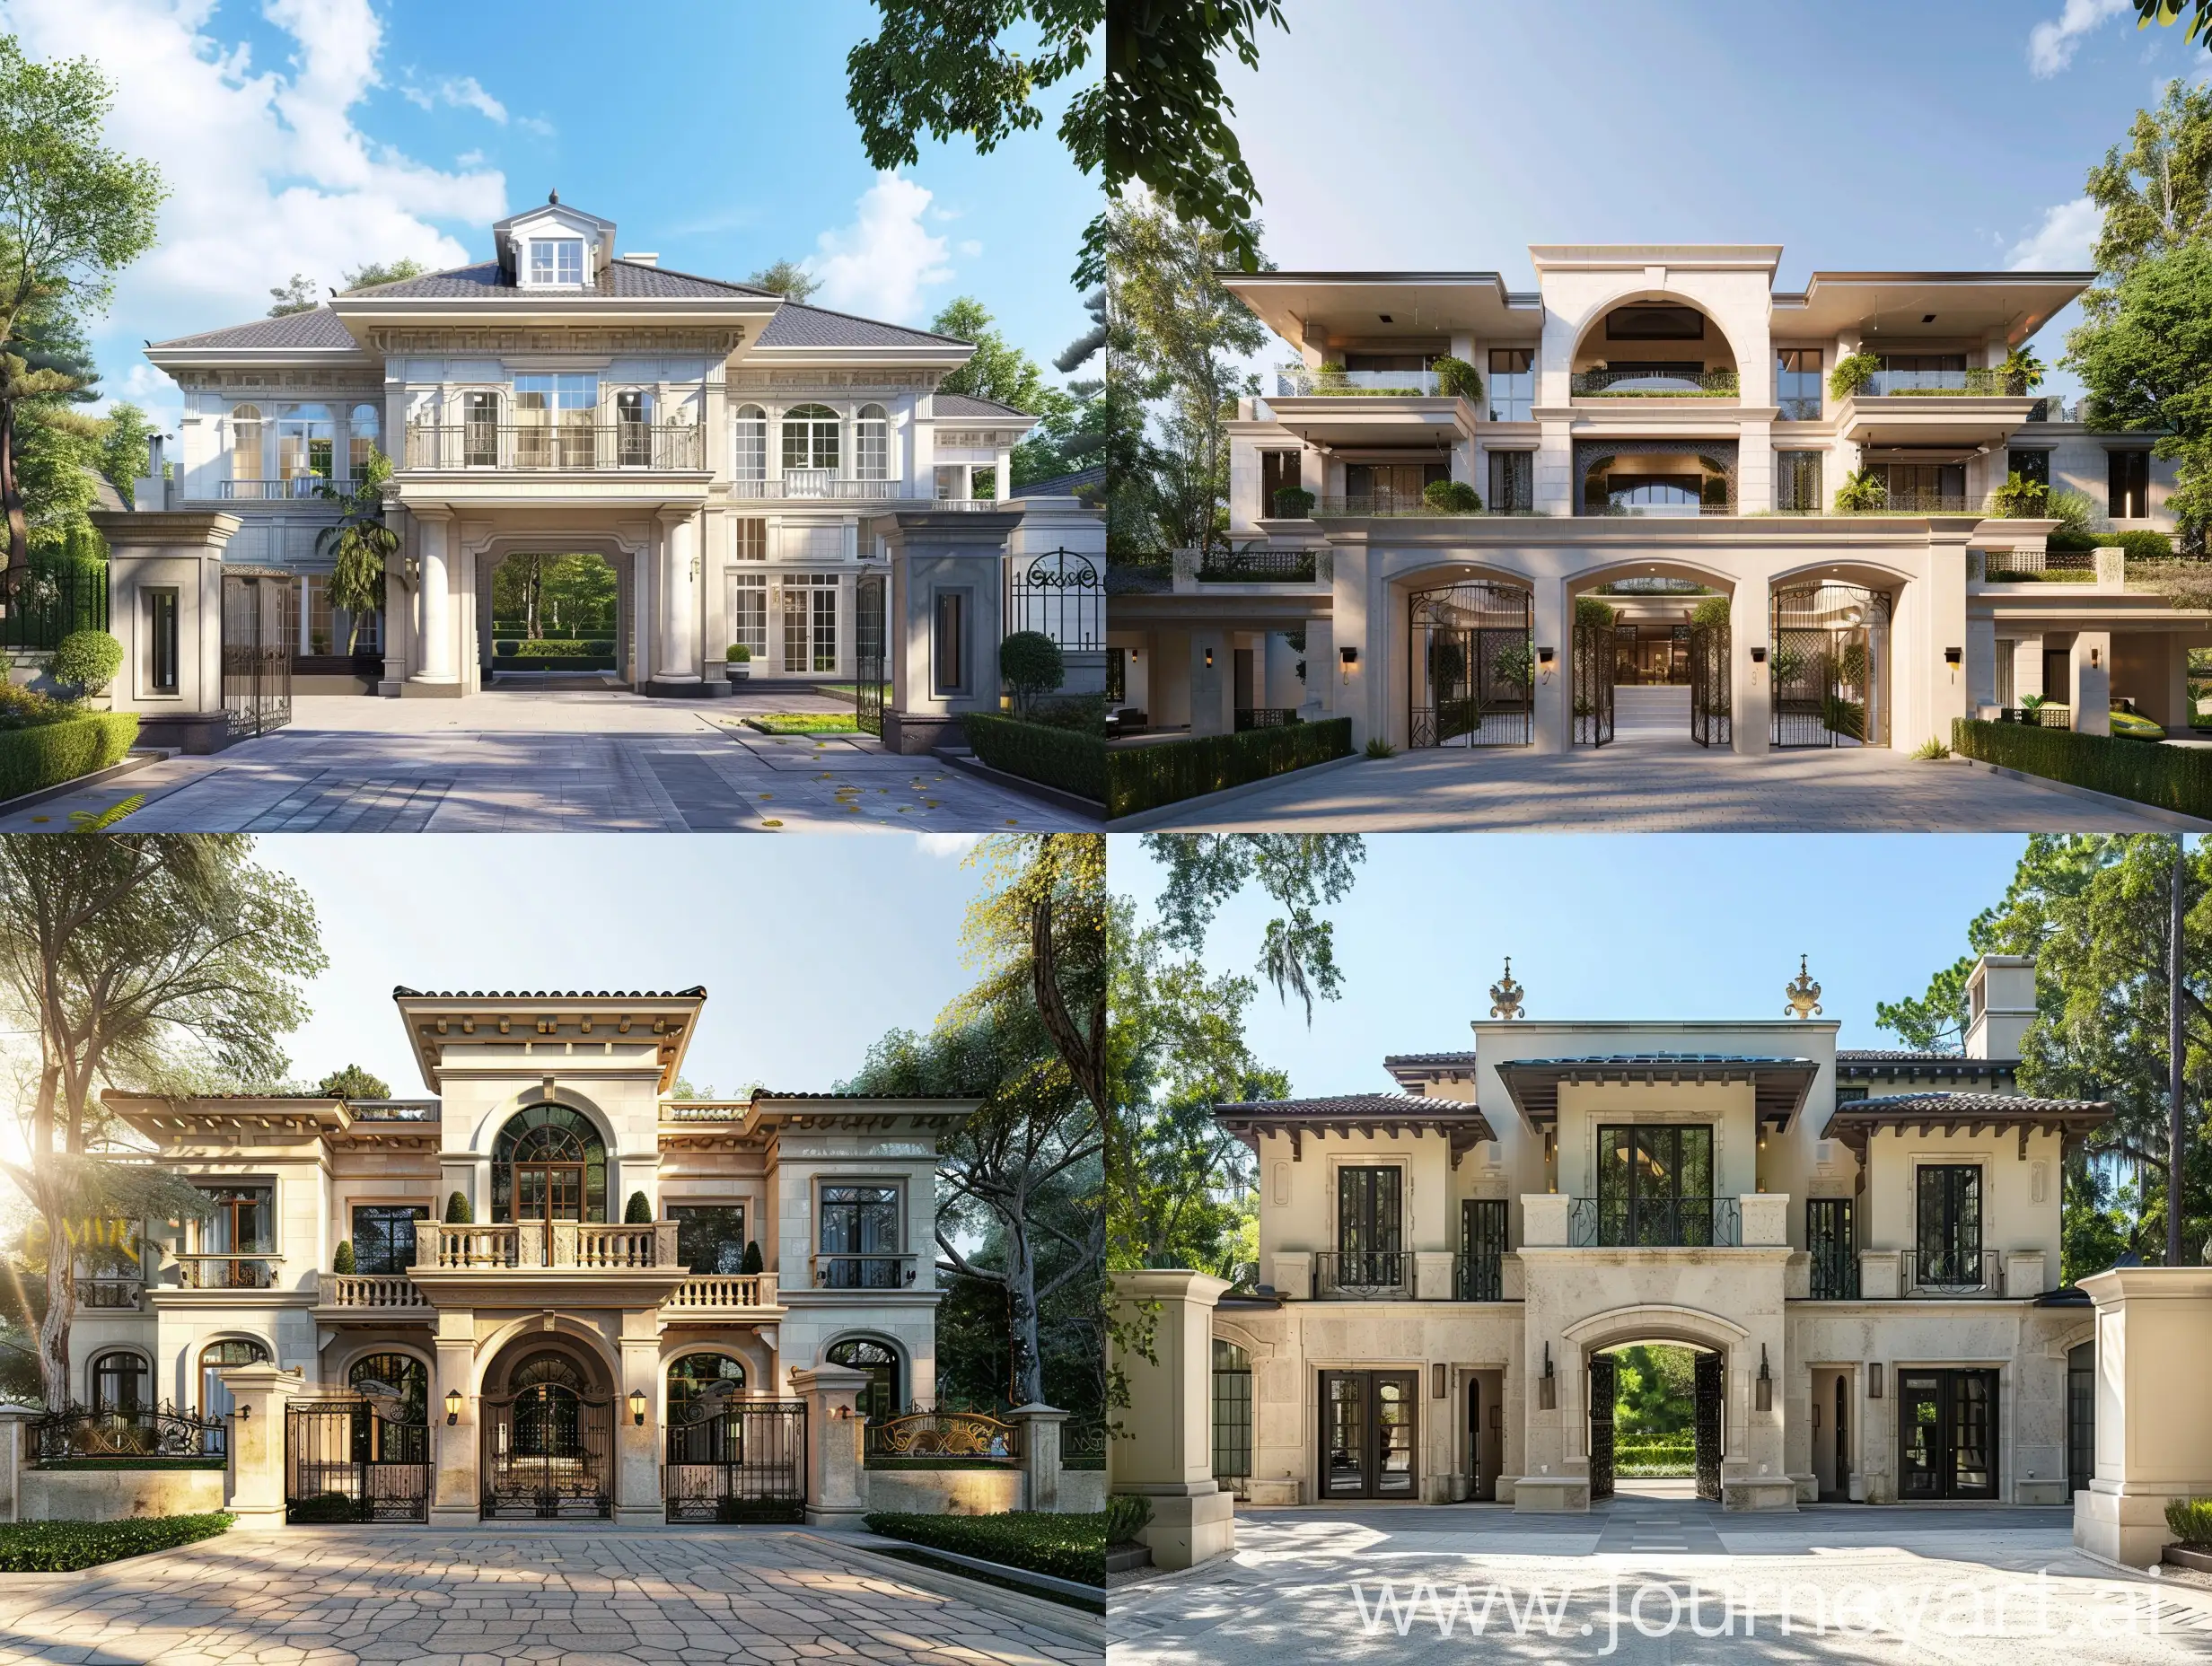 Sunlit-American-Style-Villa-with-Modern-Entrance-Gatehouse